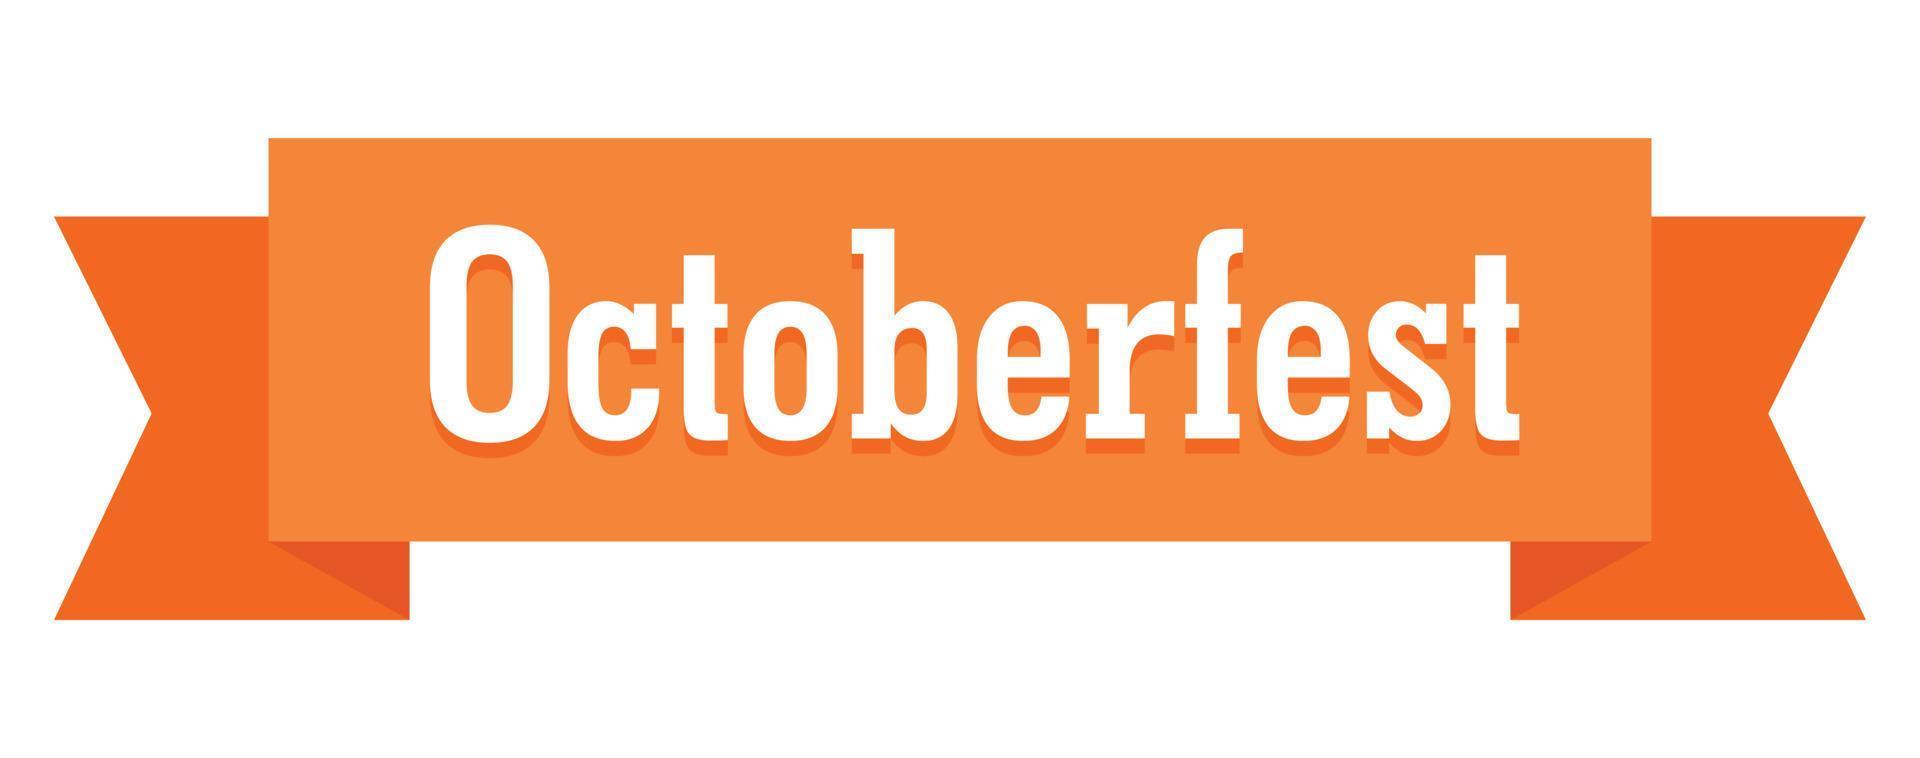 Octoberfest badge icon, flat style vector